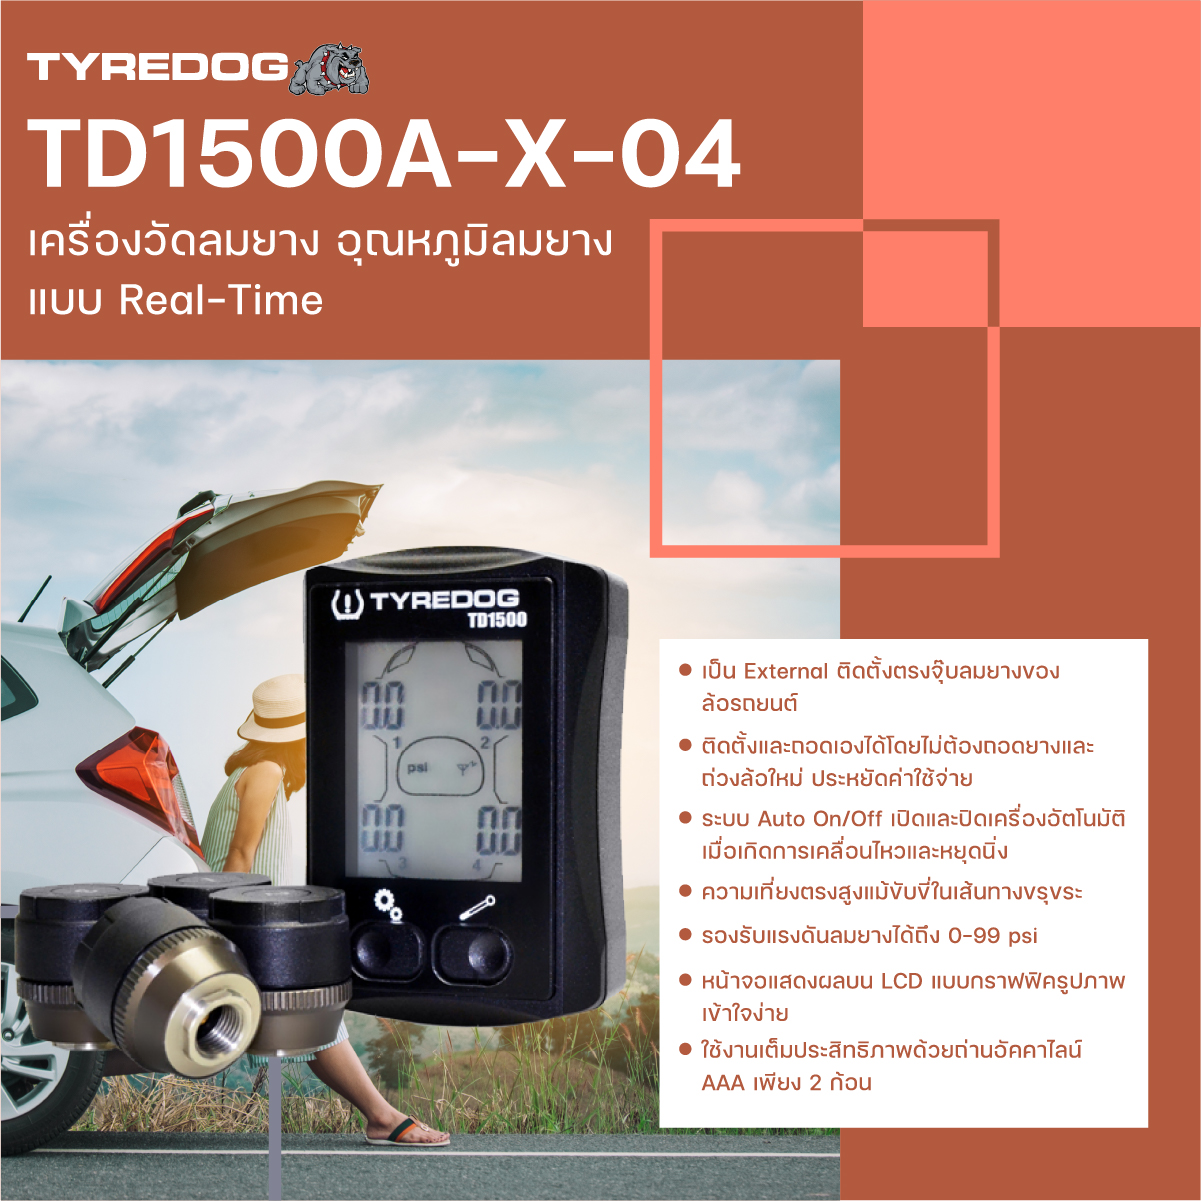 TYREDOG TD1500A-X-04 (External) TPMS  เครื่องวัดลมยาง อุณหภูมิลมยาง แบบ Real-Time หน้าจอโค้งมน